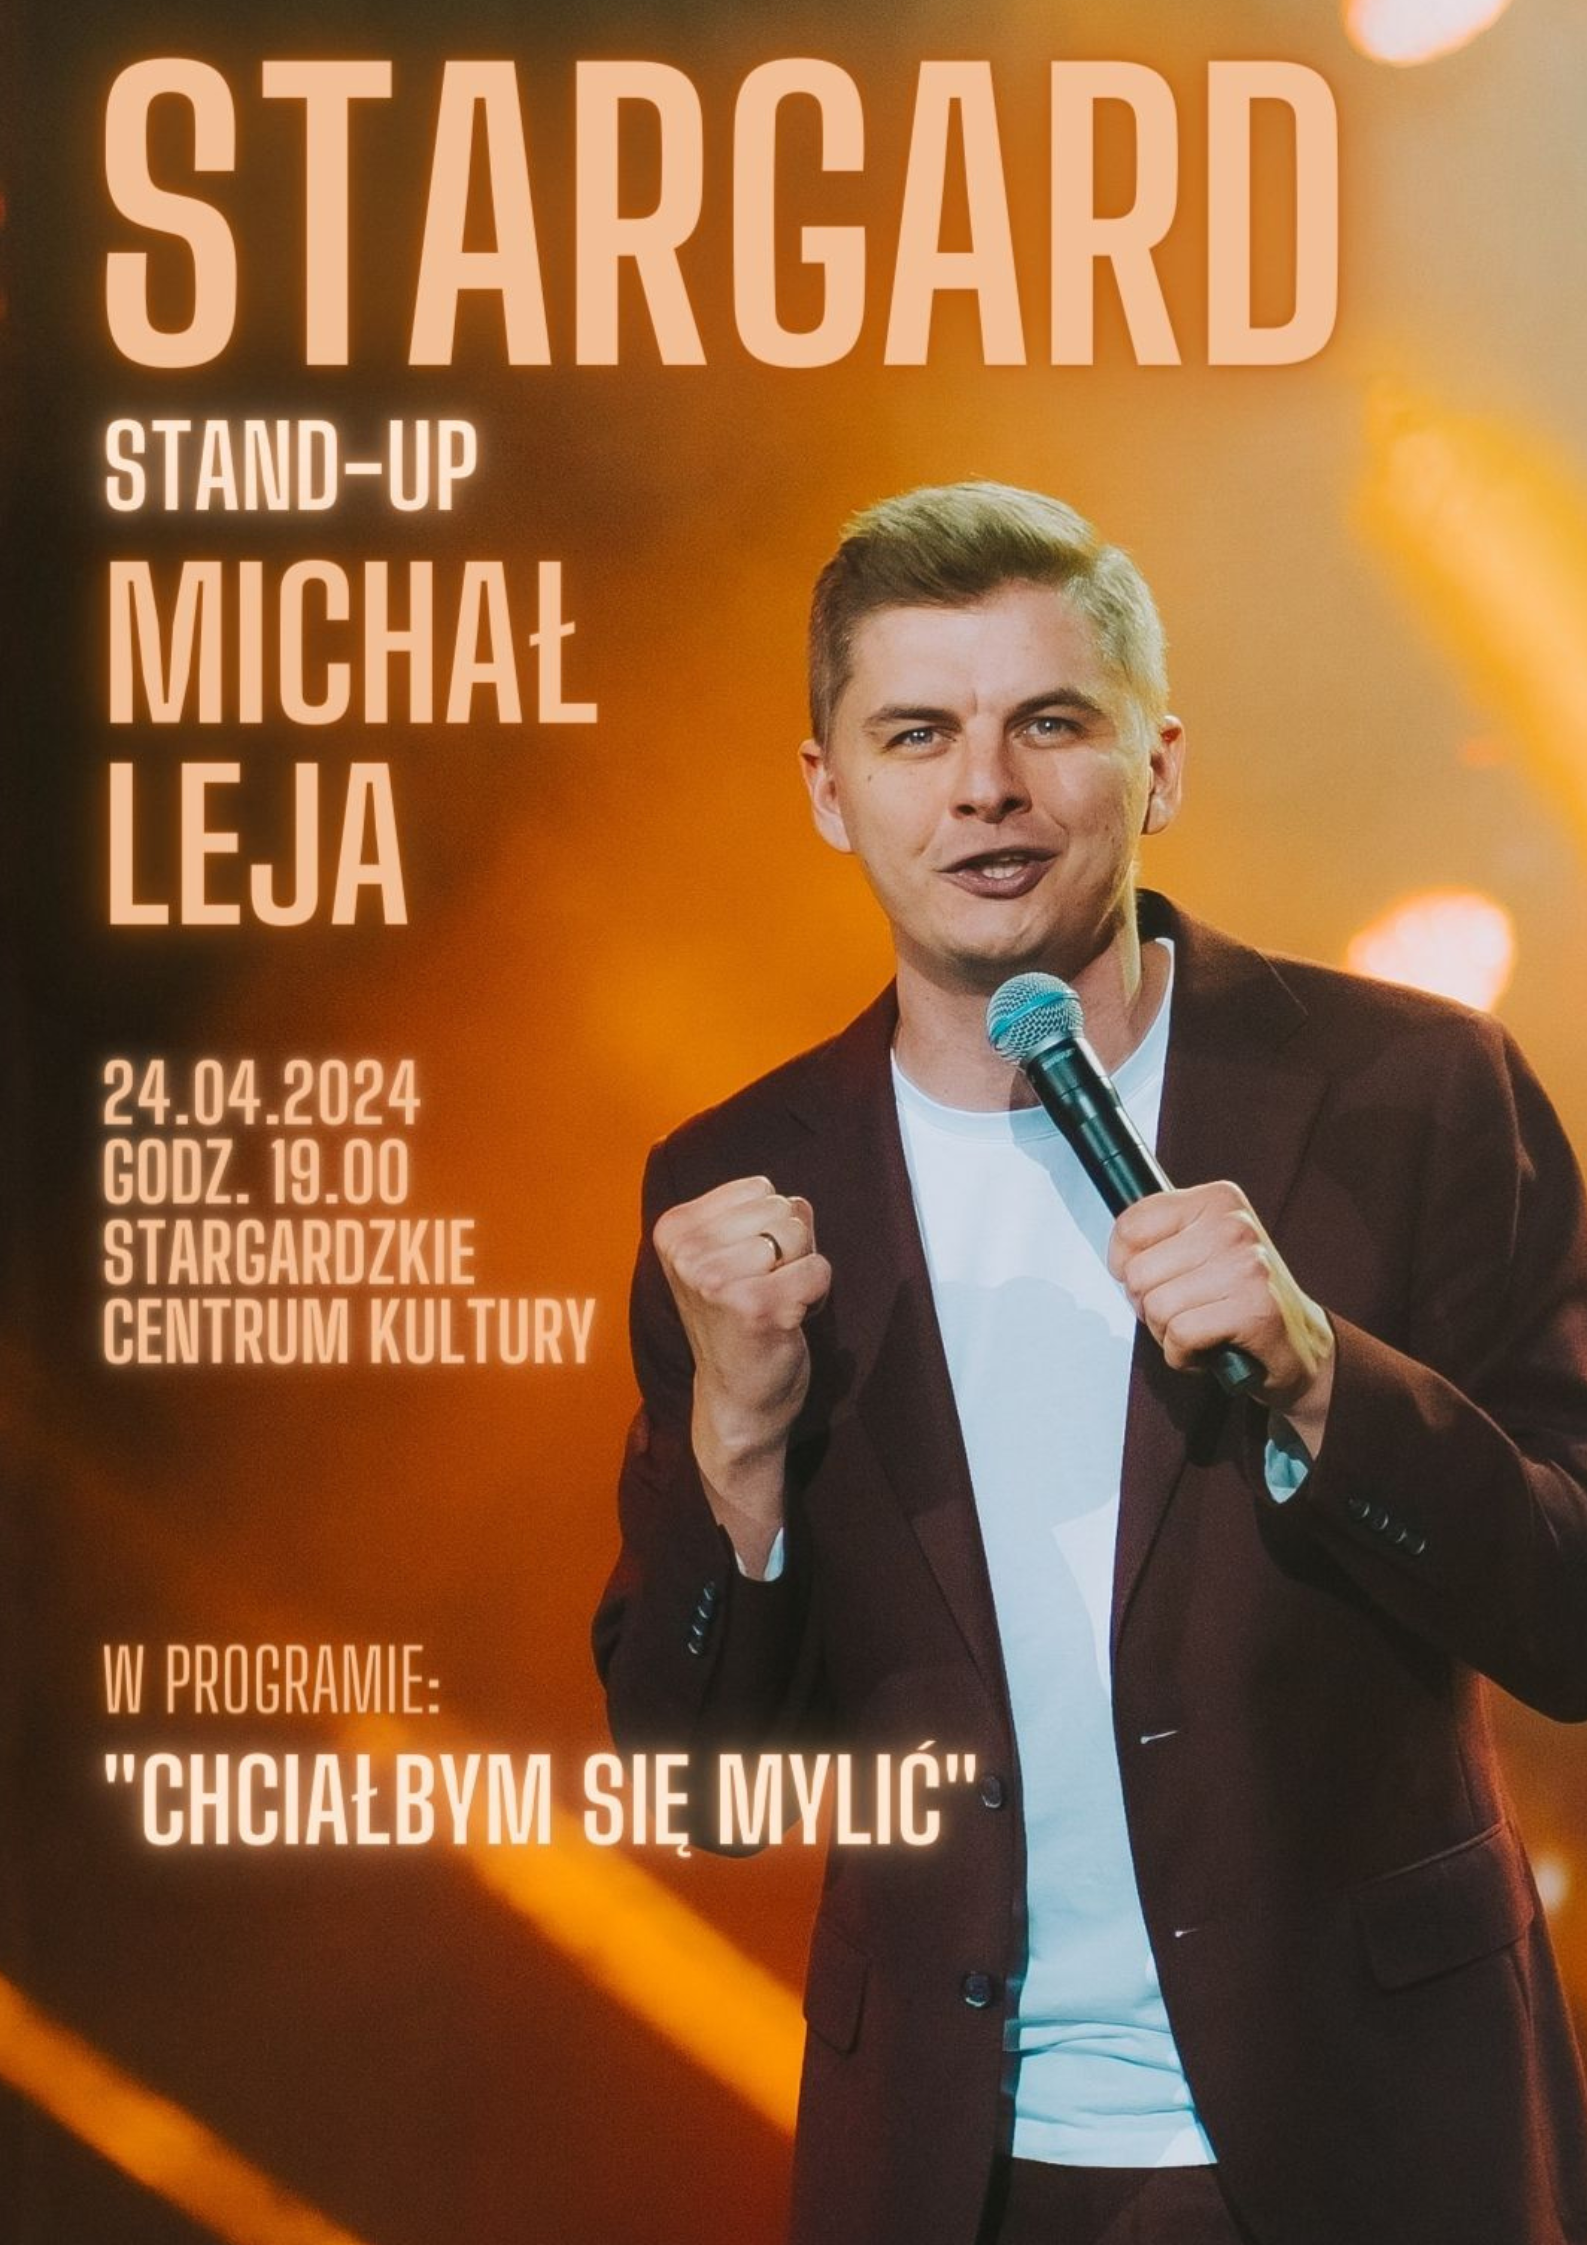 Michał Leja Show stand-up